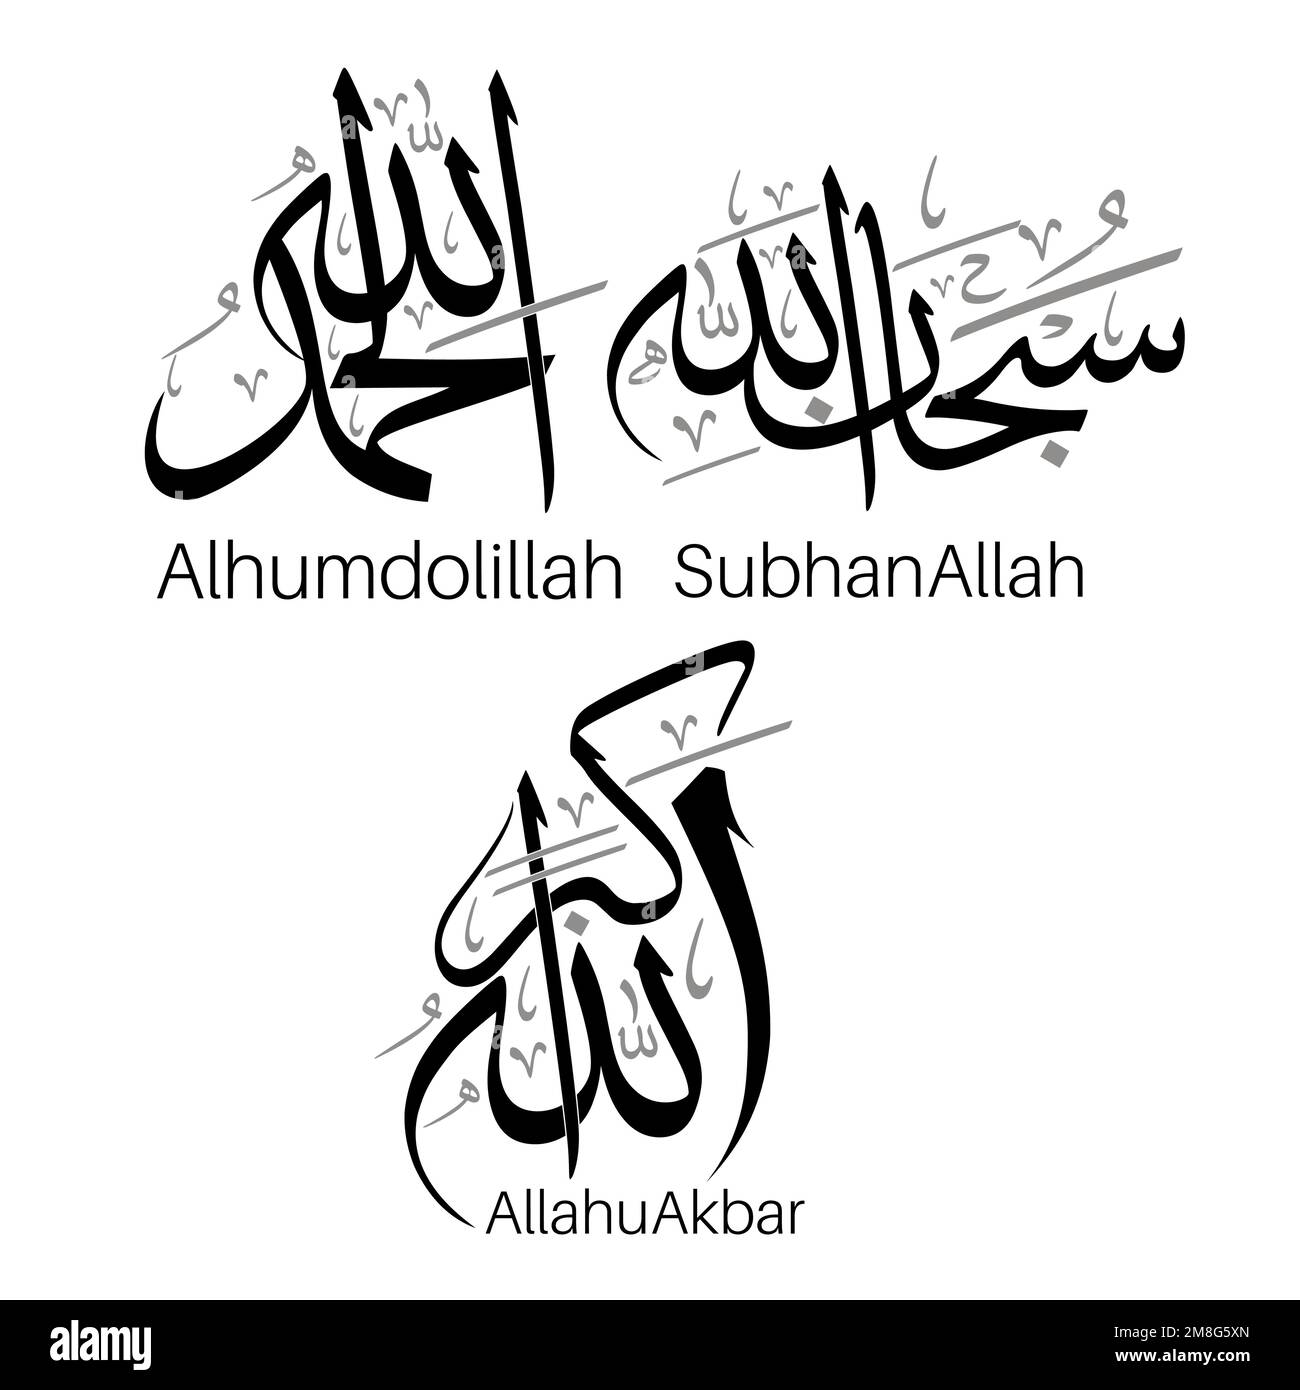 Subhan Allah alhumdolillah Allahu Akbar arabic calligraphy vector design. Stock Vector